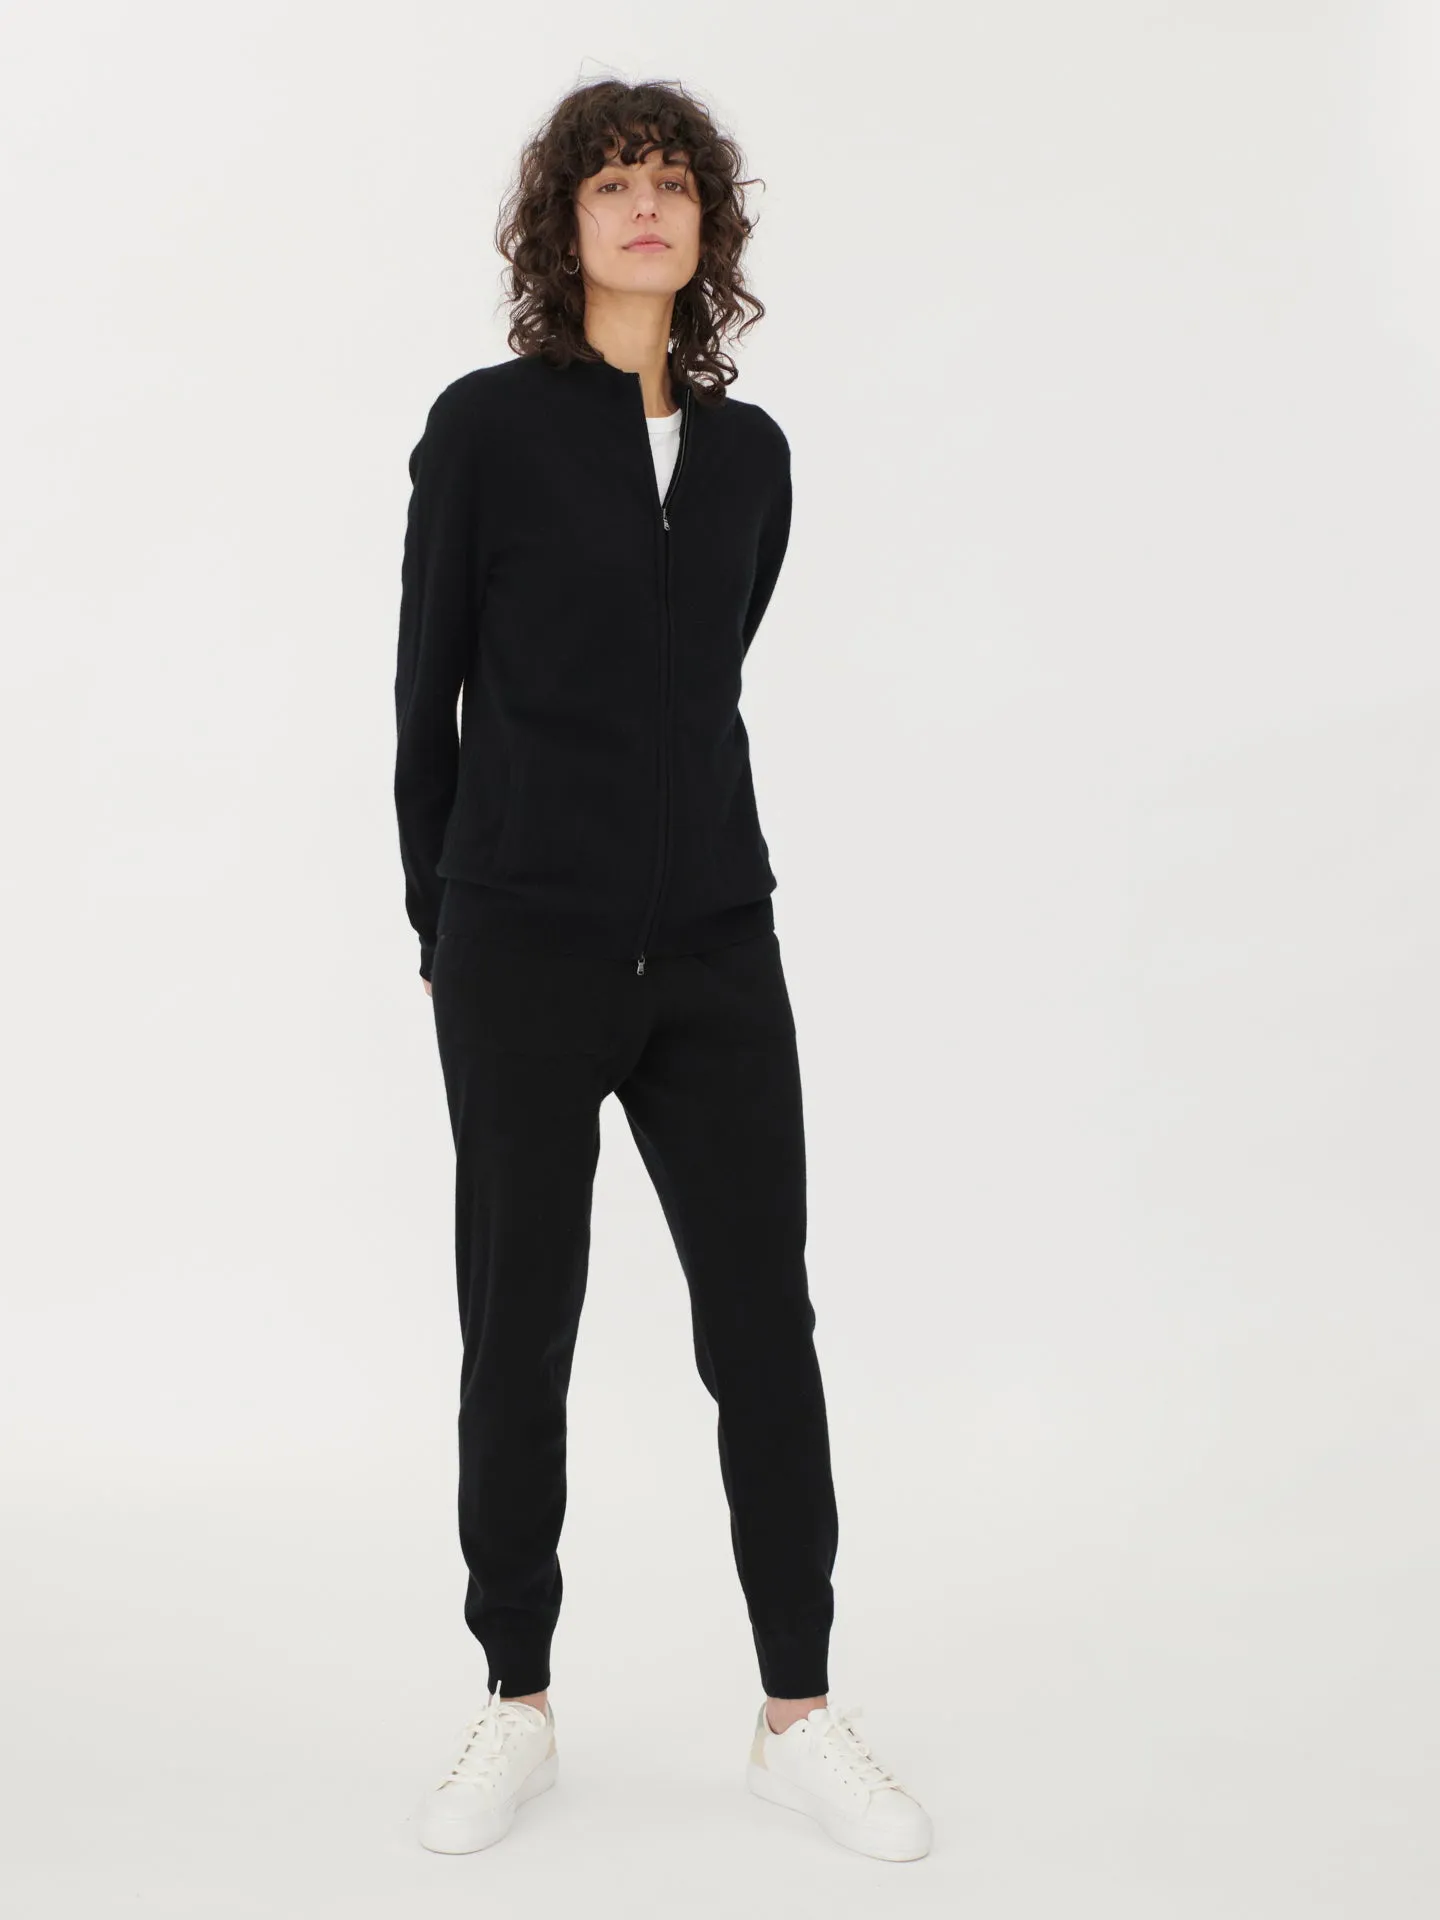 Women's Cashmere Full-Zip Cardigan Black - Gobi Cashmere